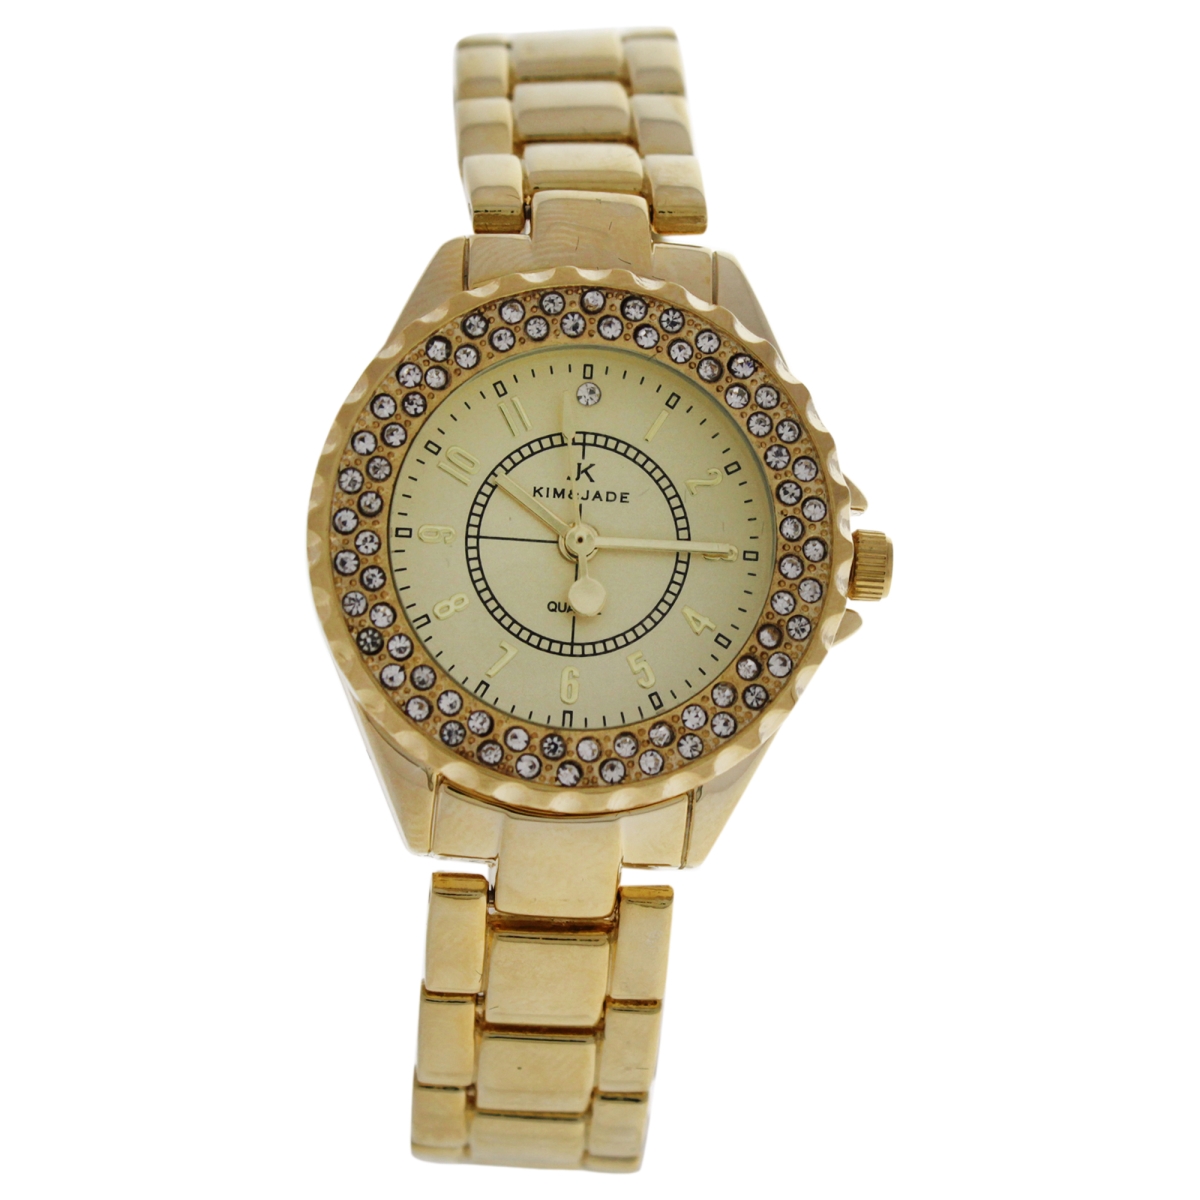 Picture of Kim & Jade W-WAT-1469 Gold Stainless Steel Bracelet Watch for Women - 2033L-GG